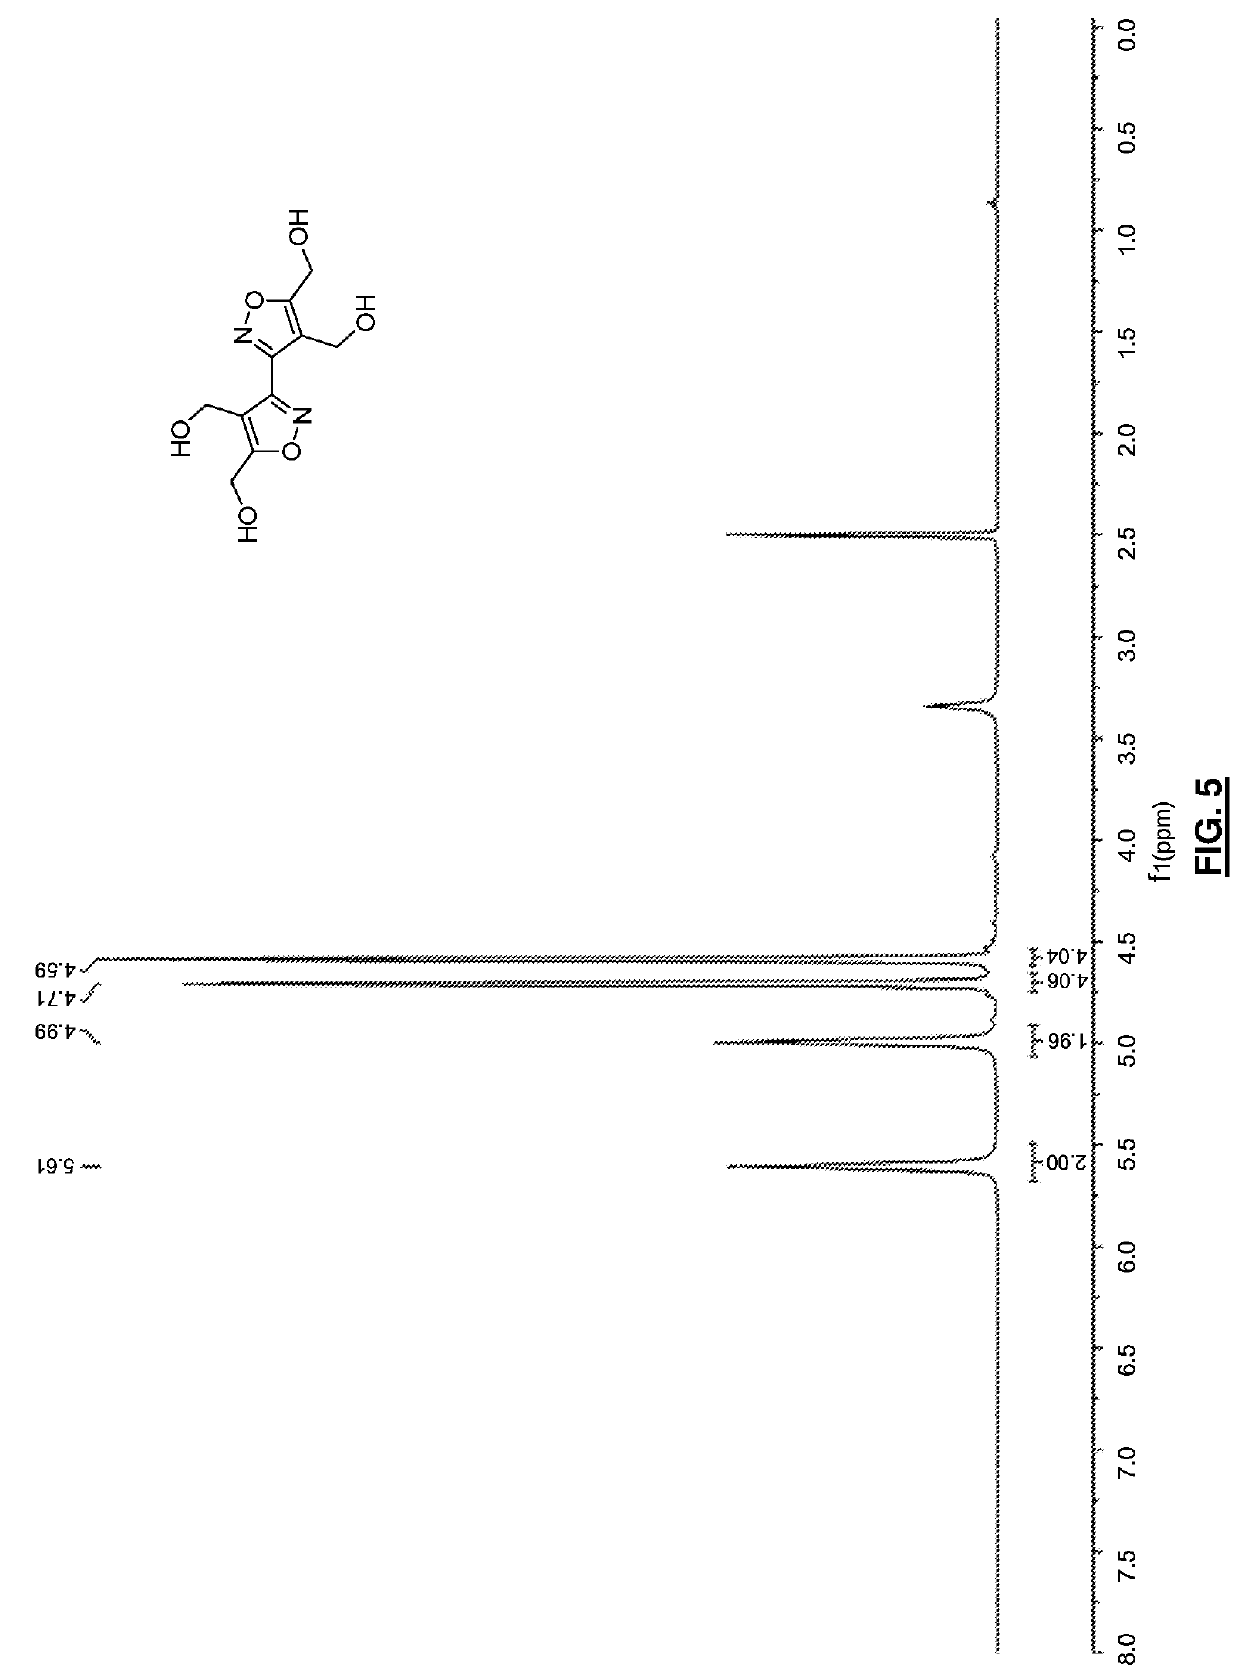 Bis-isoxazole tetranitrate (BITN): a high-energy propellant plasticizer and melt-castable eutectic explosive ingredient